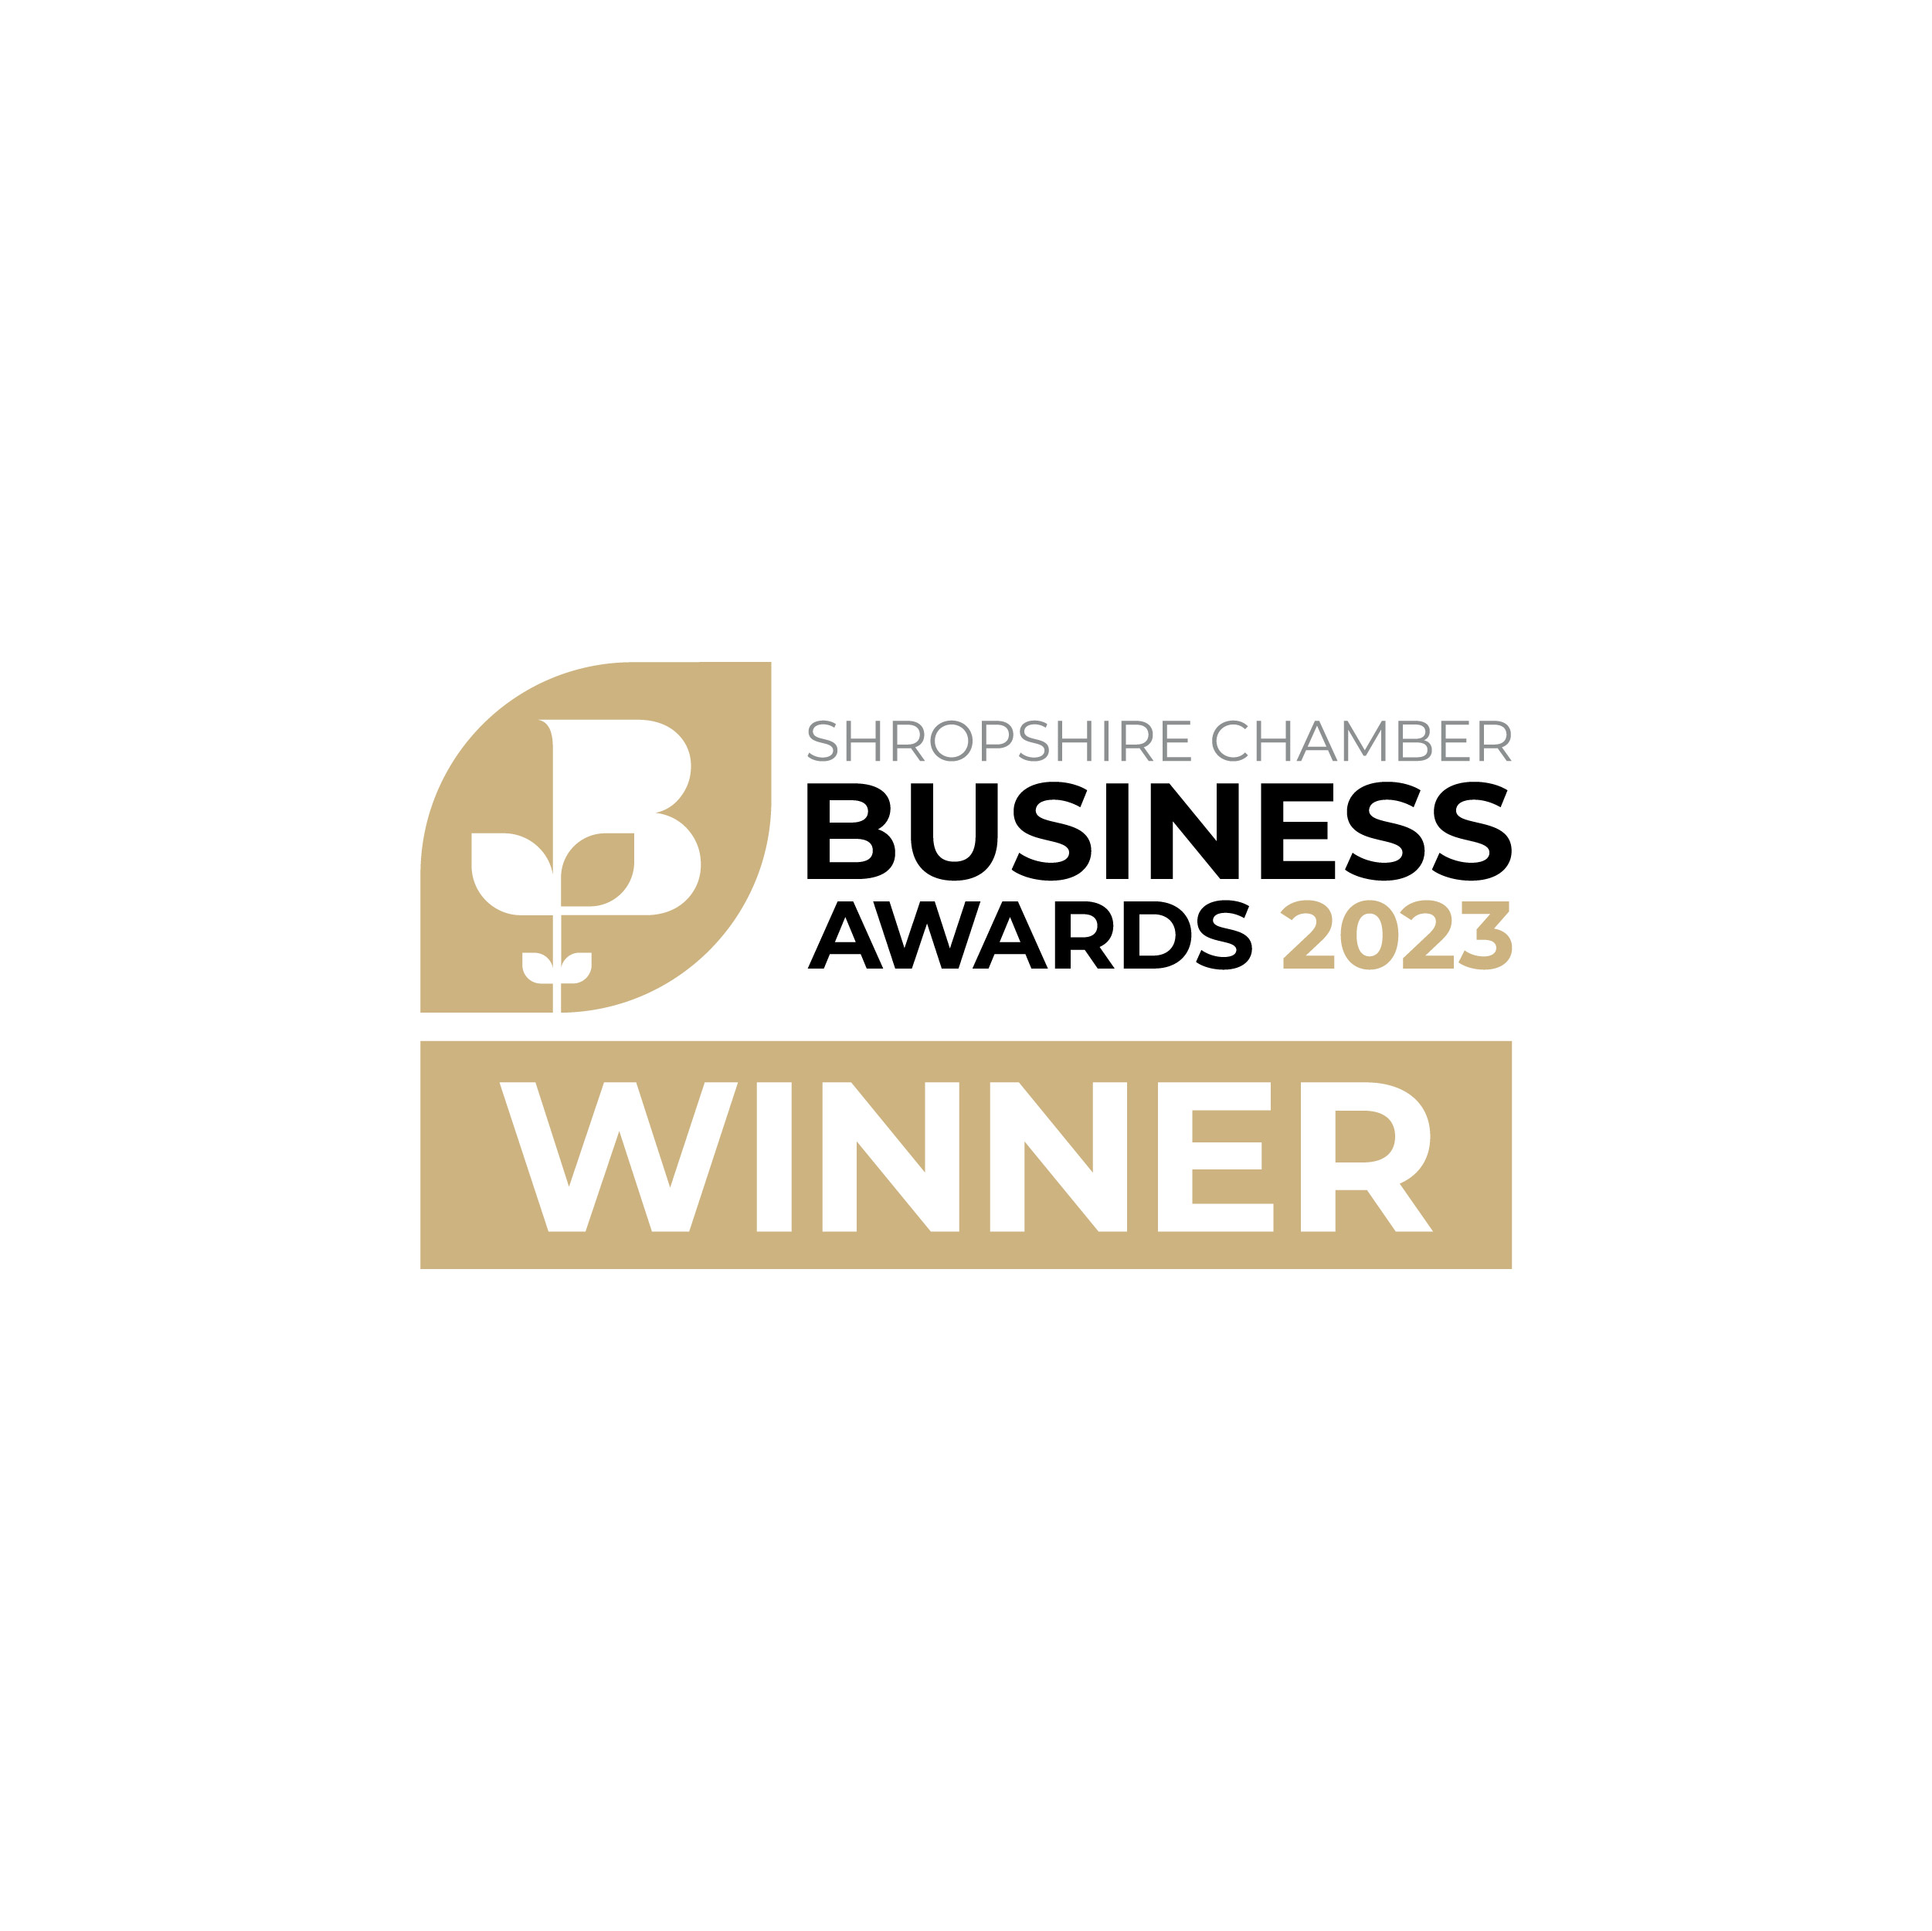 We’re Shropshire Chamber Business Awards winners